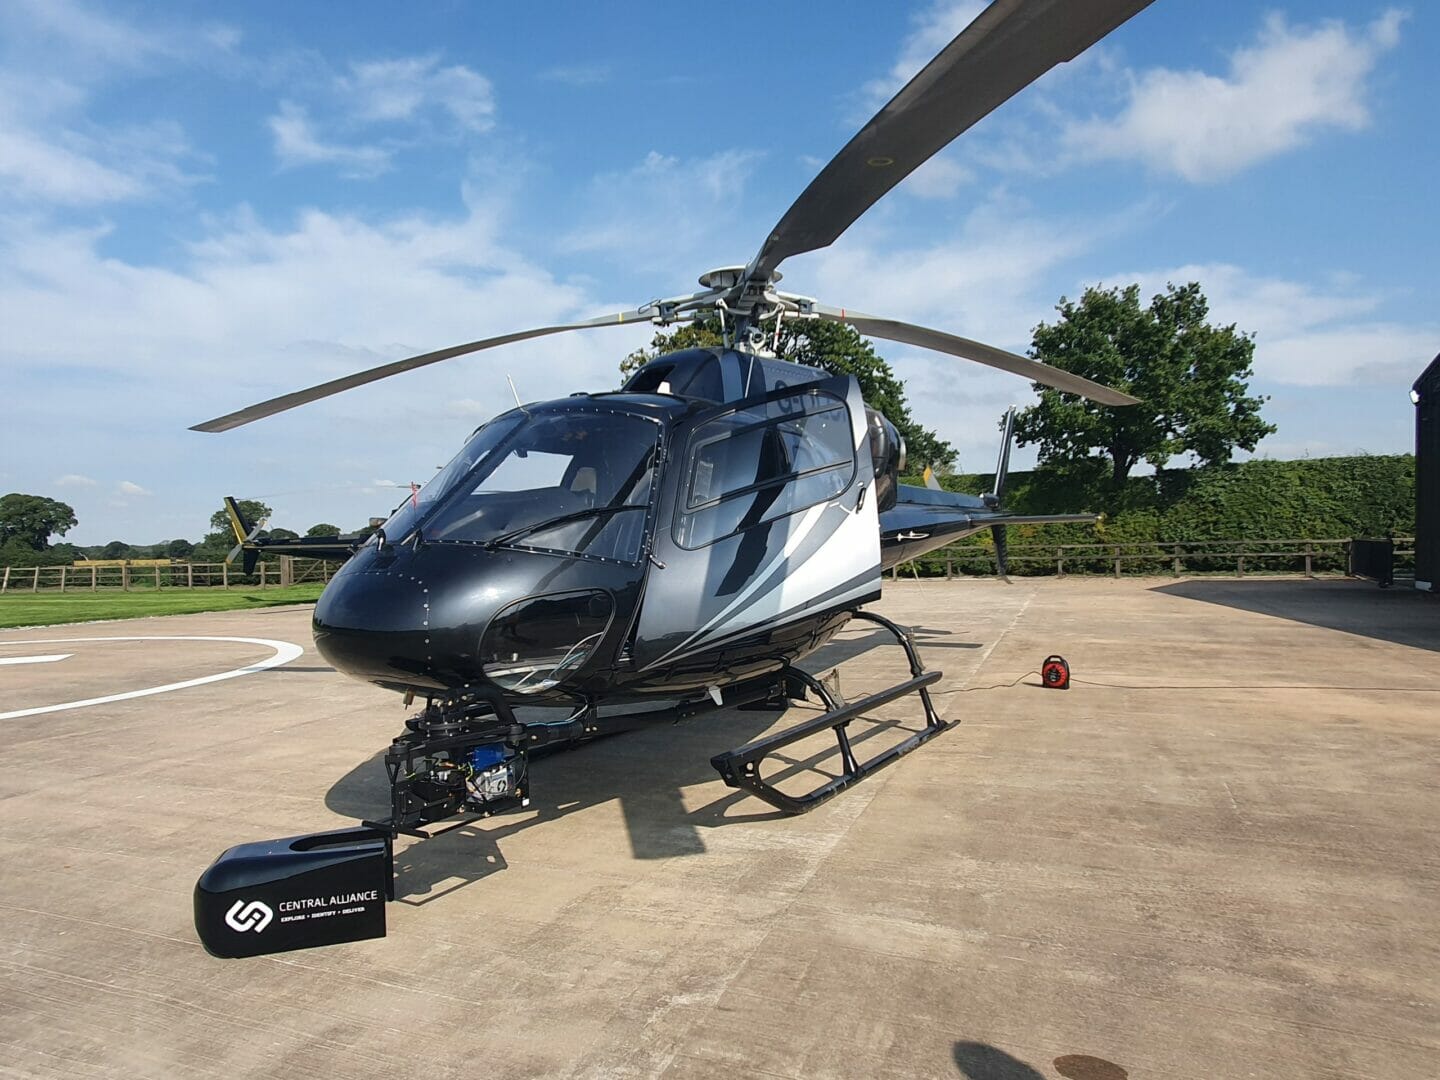 Investment in Helicopter Pod for Aerial LiDAR Surveys